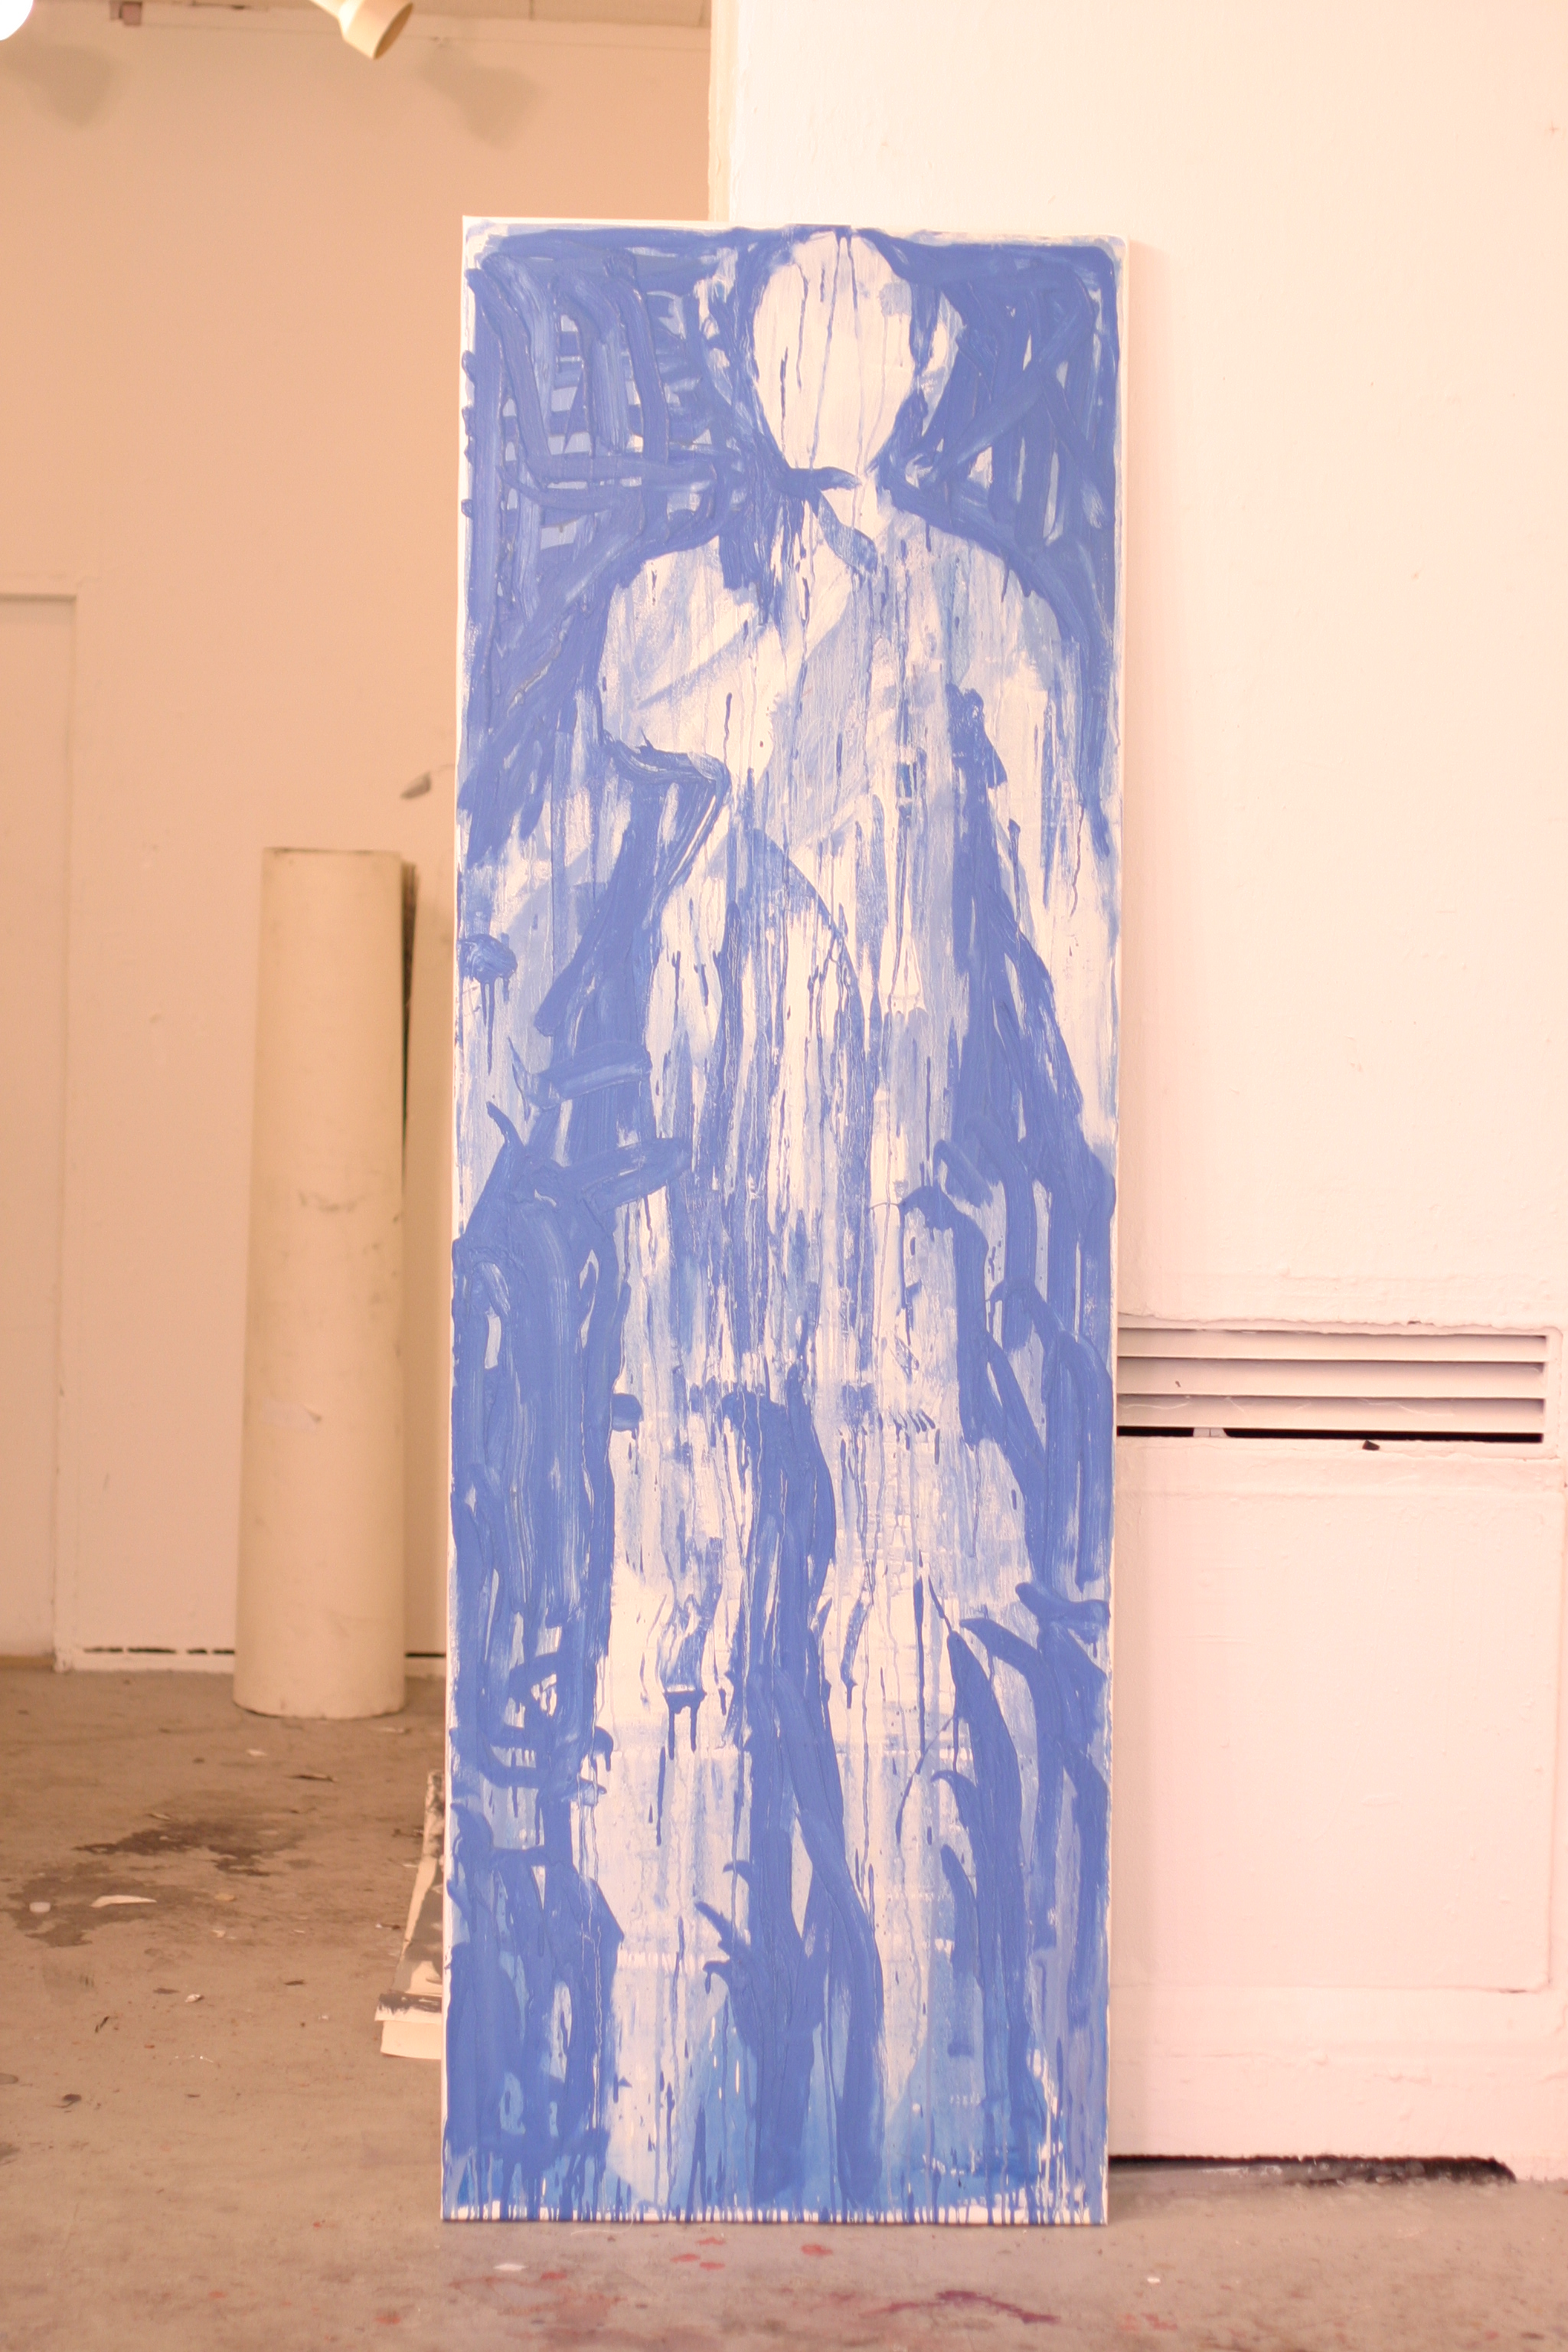  Figuration (Identity), oil on canvas, 250x83cm, 2009 